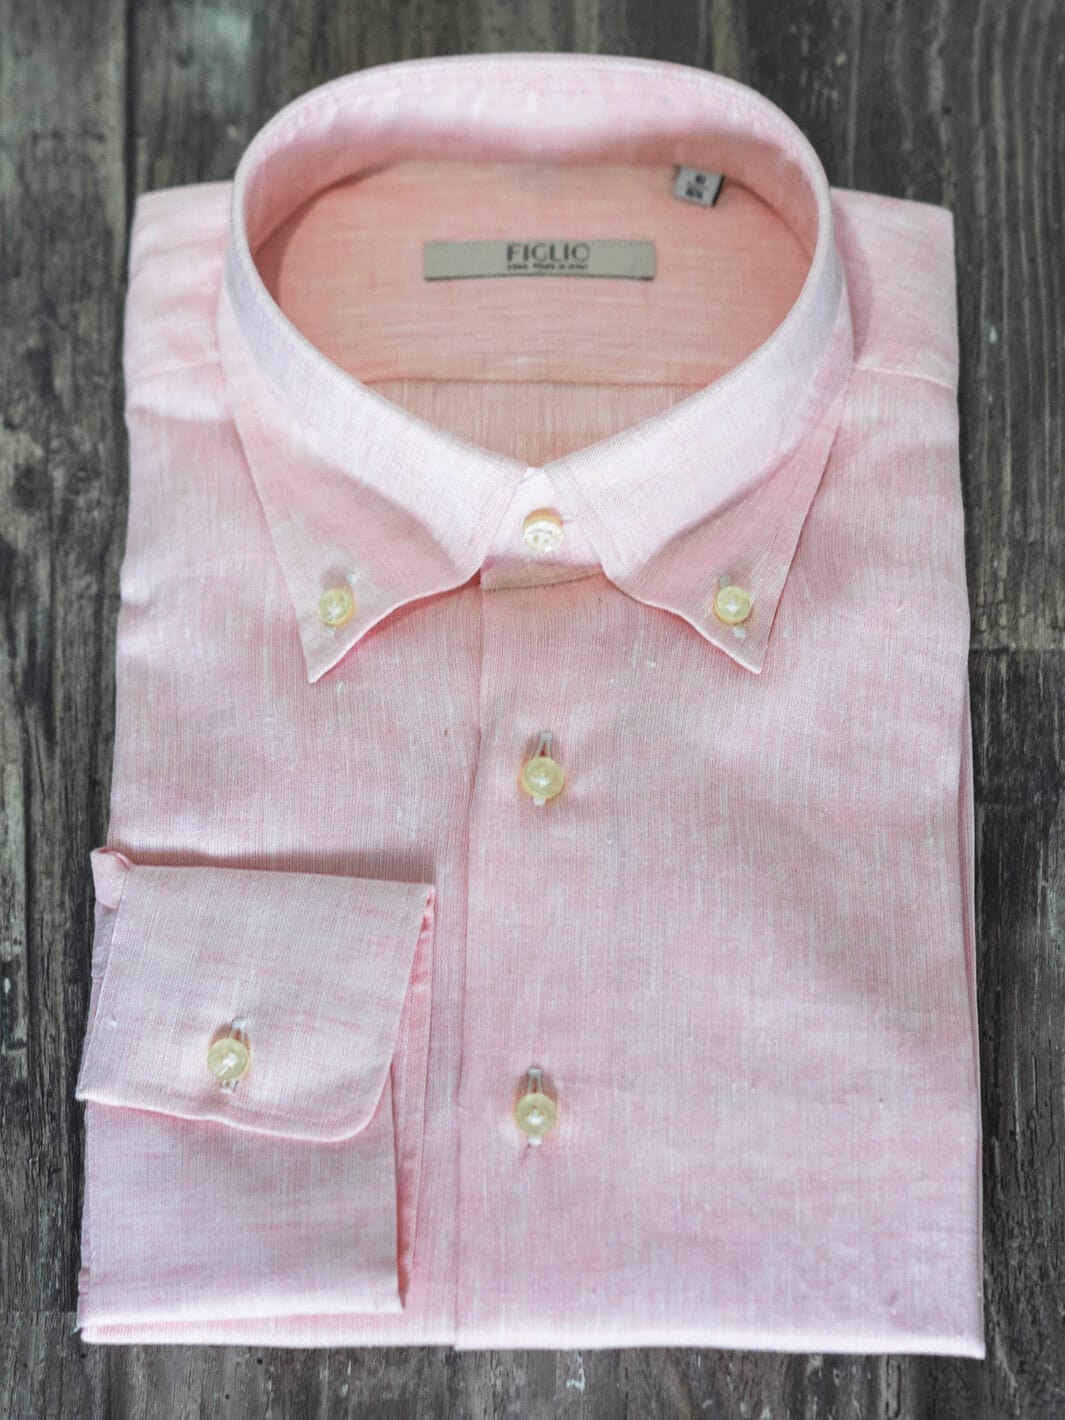 Figlio Light Pink Shirt